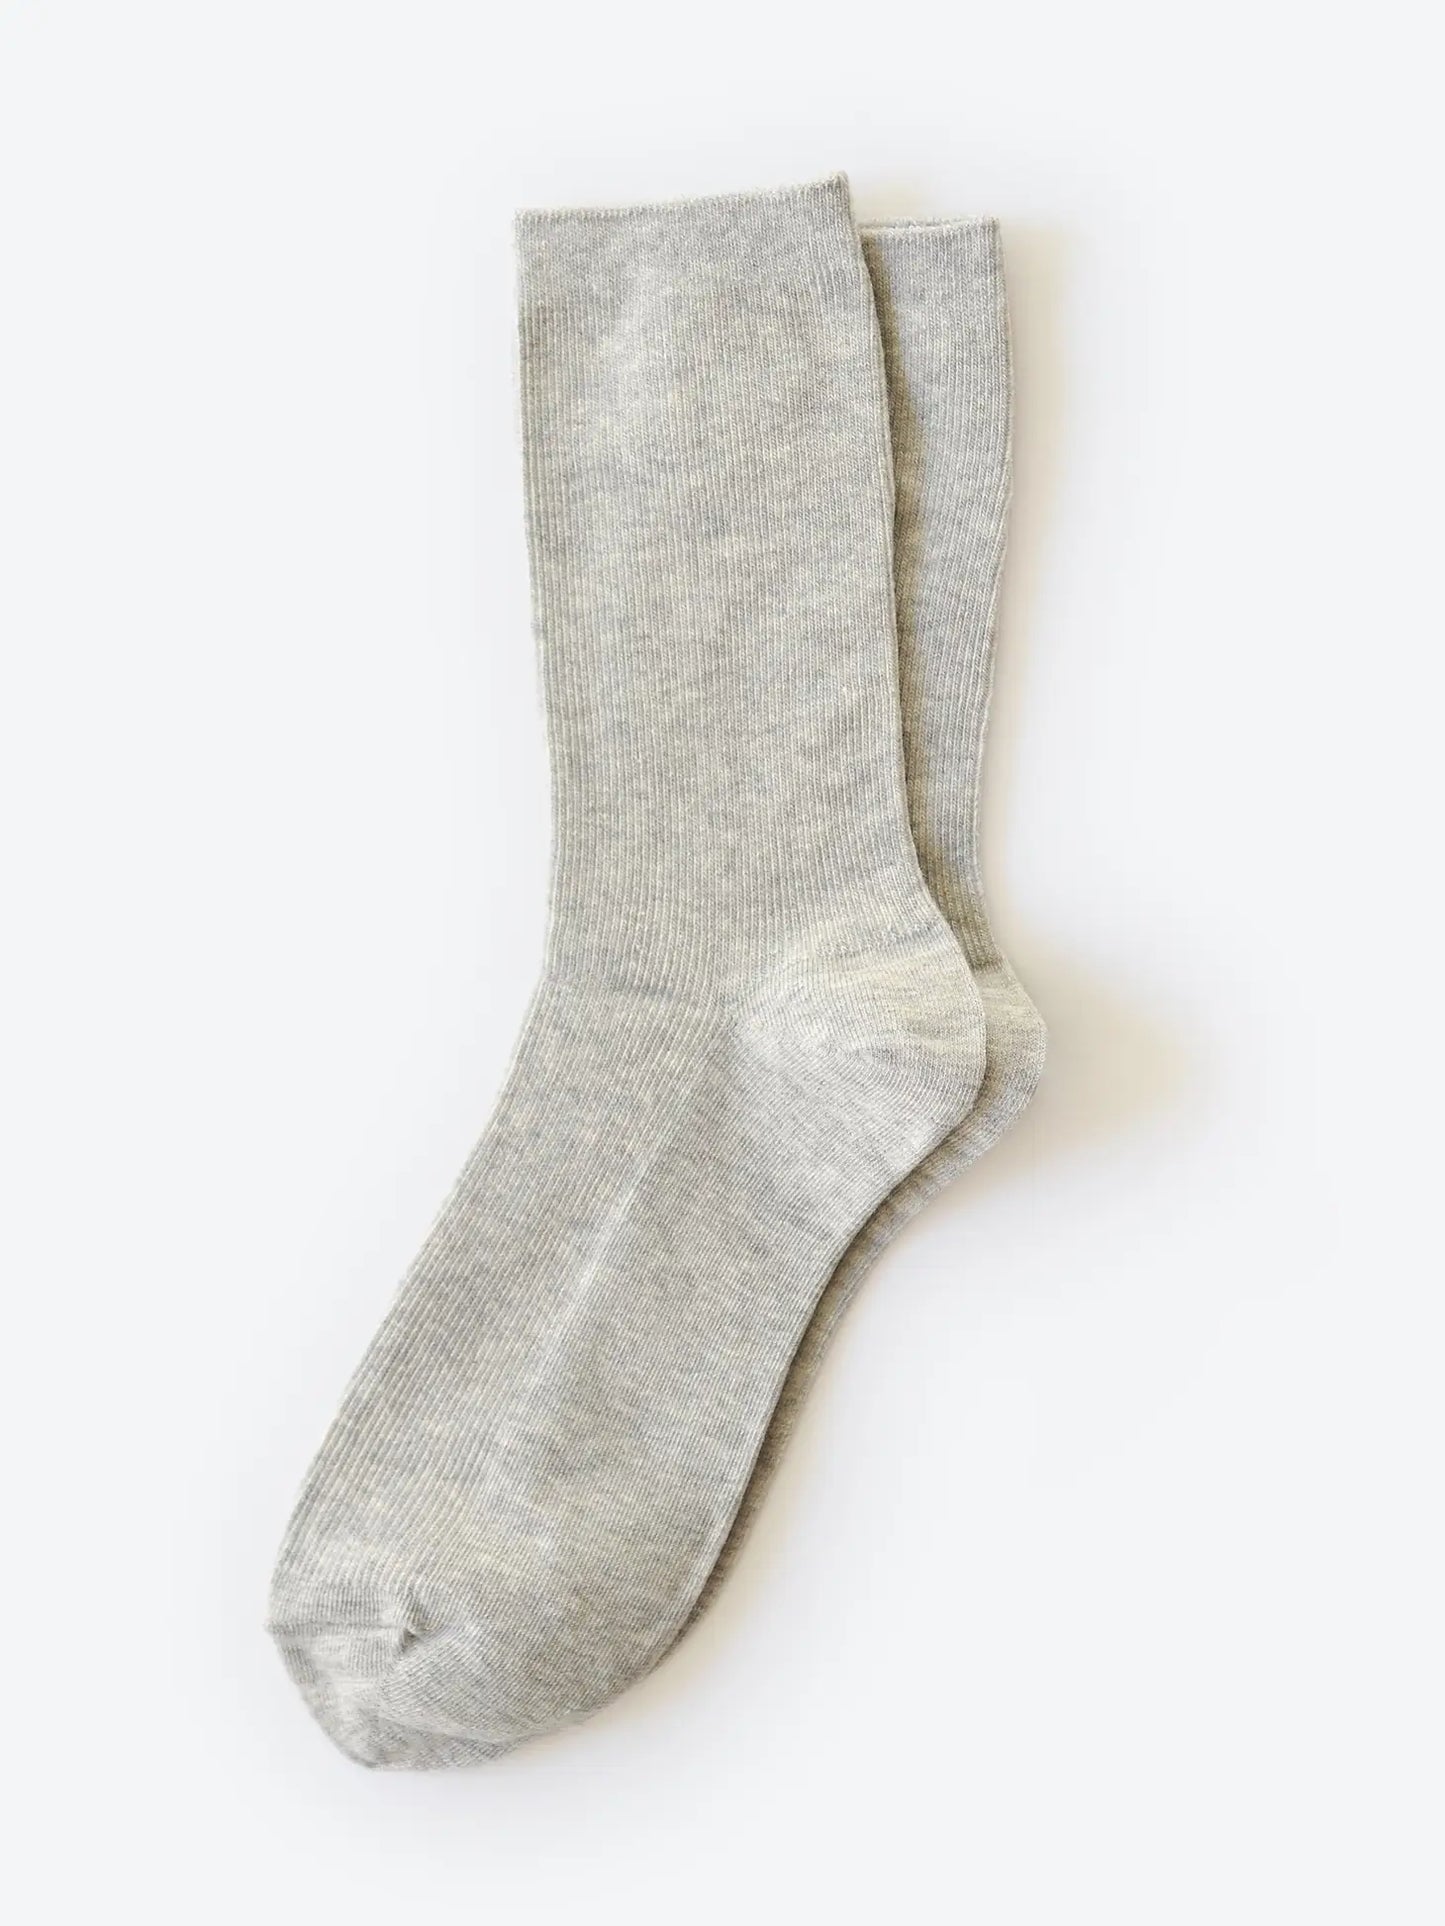 Cement Socks - Grey